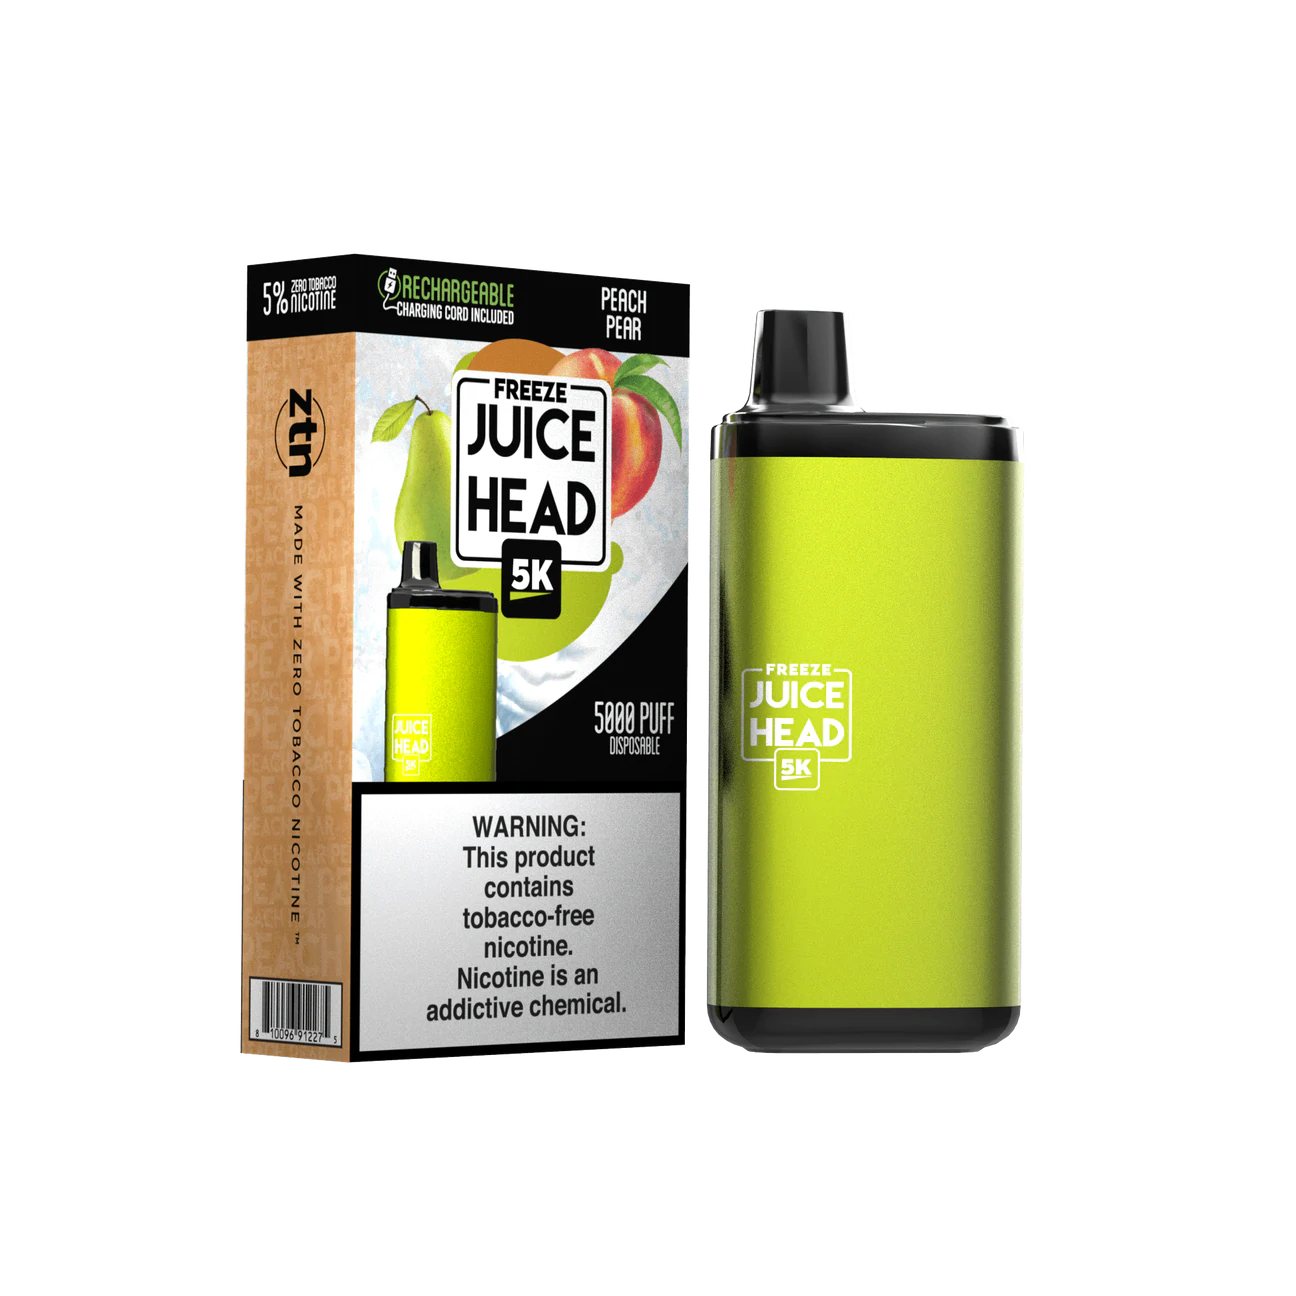 Juice Head 5000 Puffs Disposable Vape Device Peach Pear FREEZE